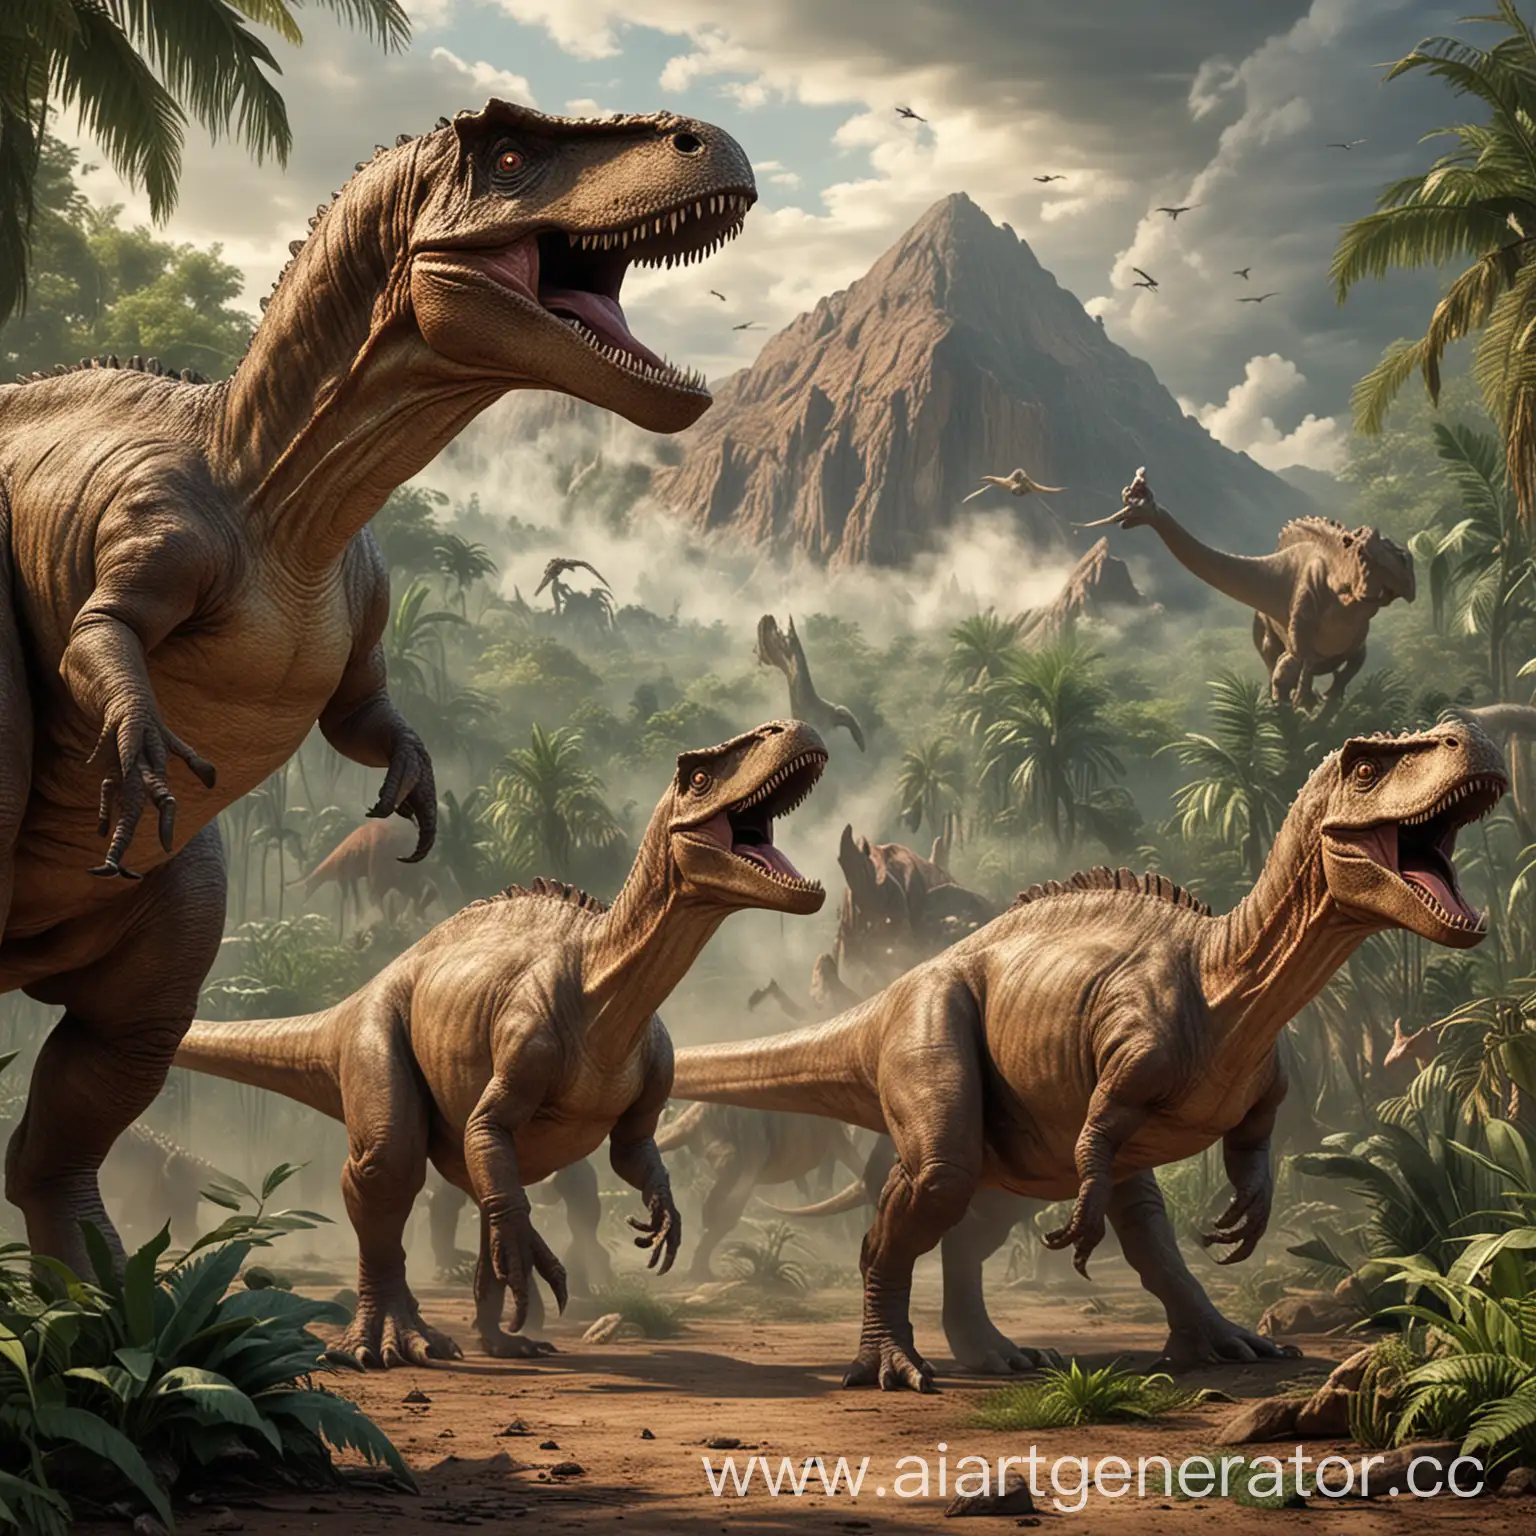 Prehistoric-Dinosaurs-in-Lush-Jungle-Environment